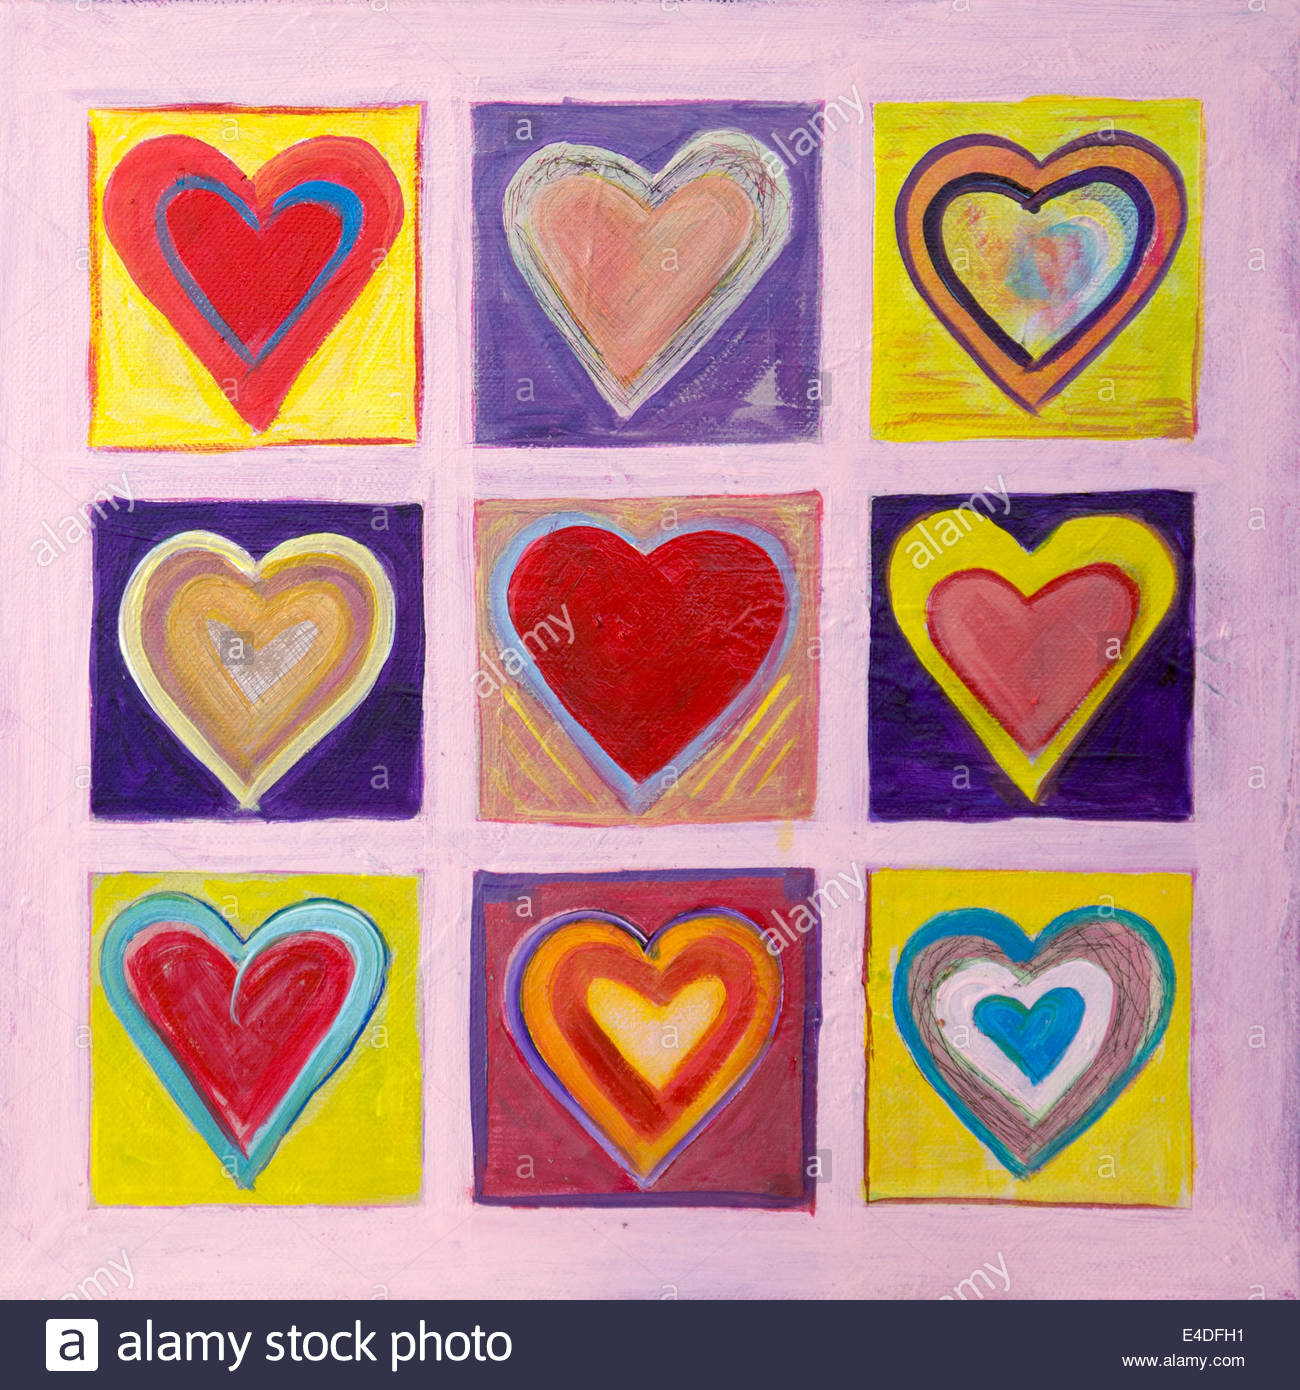 "Hearts" Jasper Johns